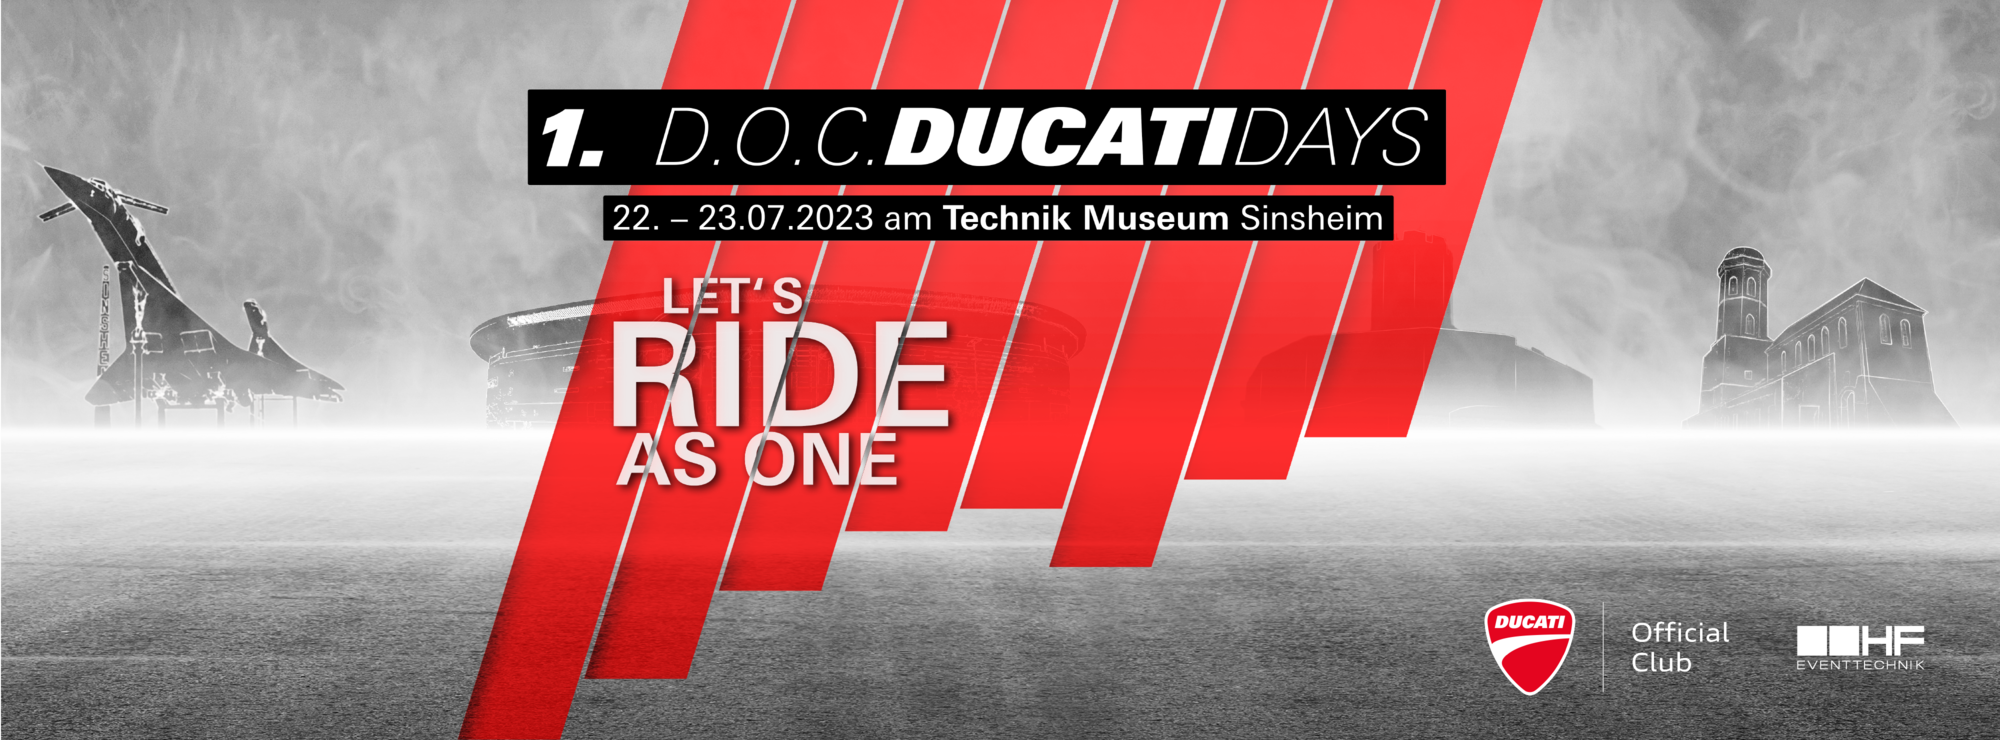 D.O.C Ducati Days